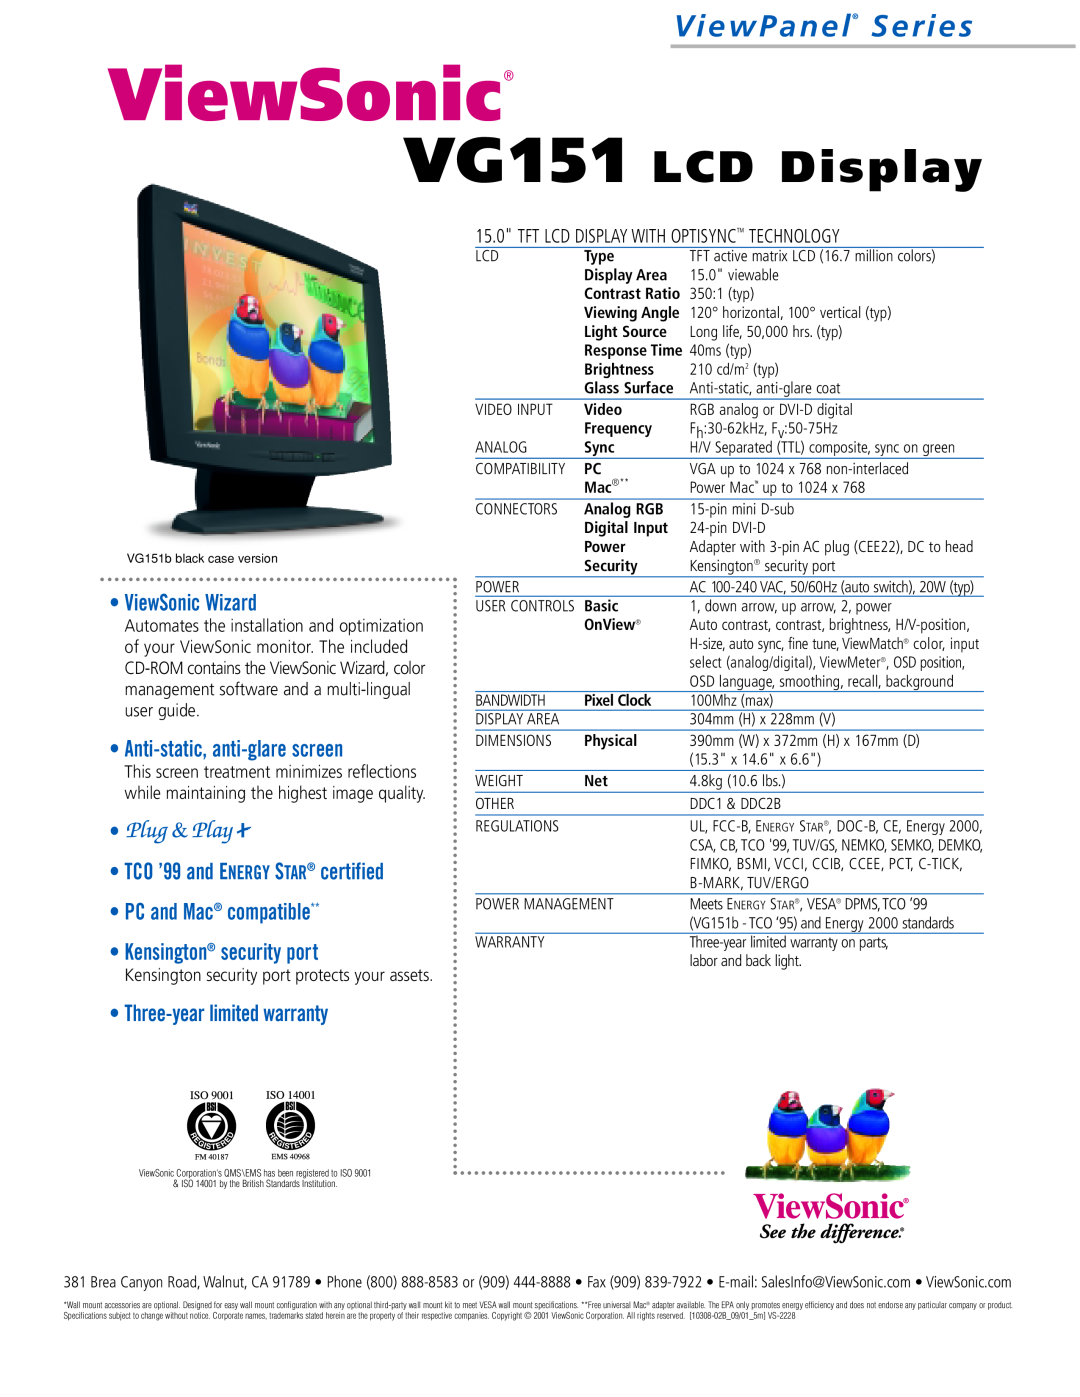 ViewSonic VG151 manual ViewSonic Wizard, Anti-static, anti-glare screen, PC and Mac compatible Kensington security port 